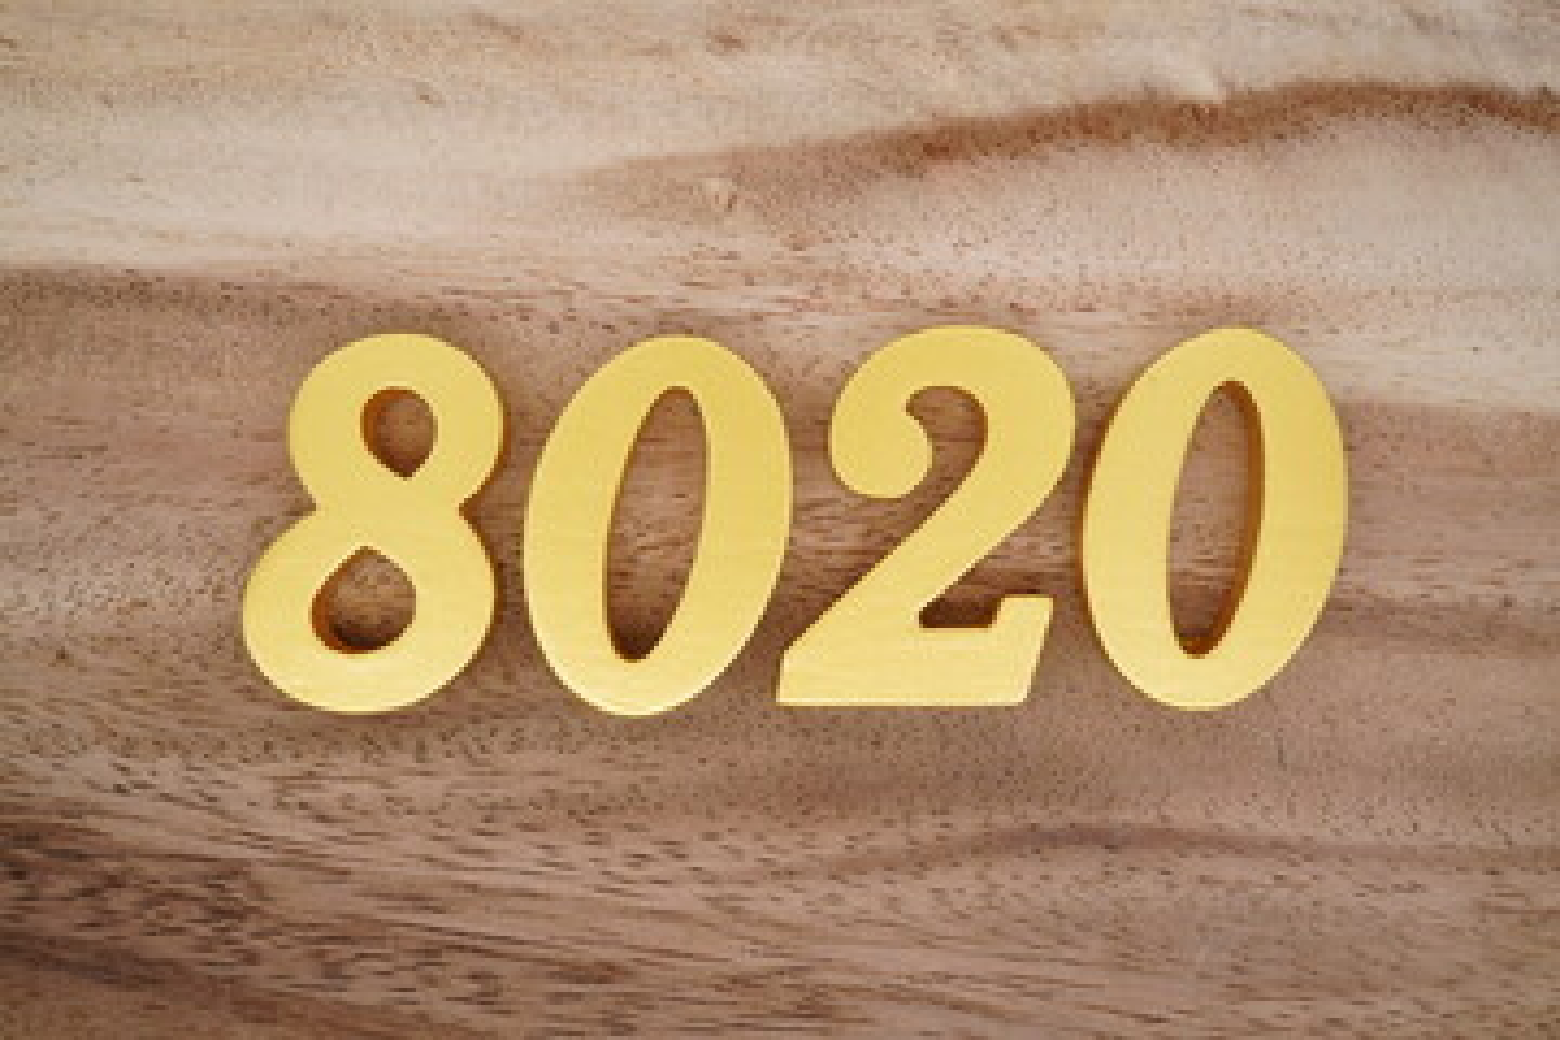 8020 gold